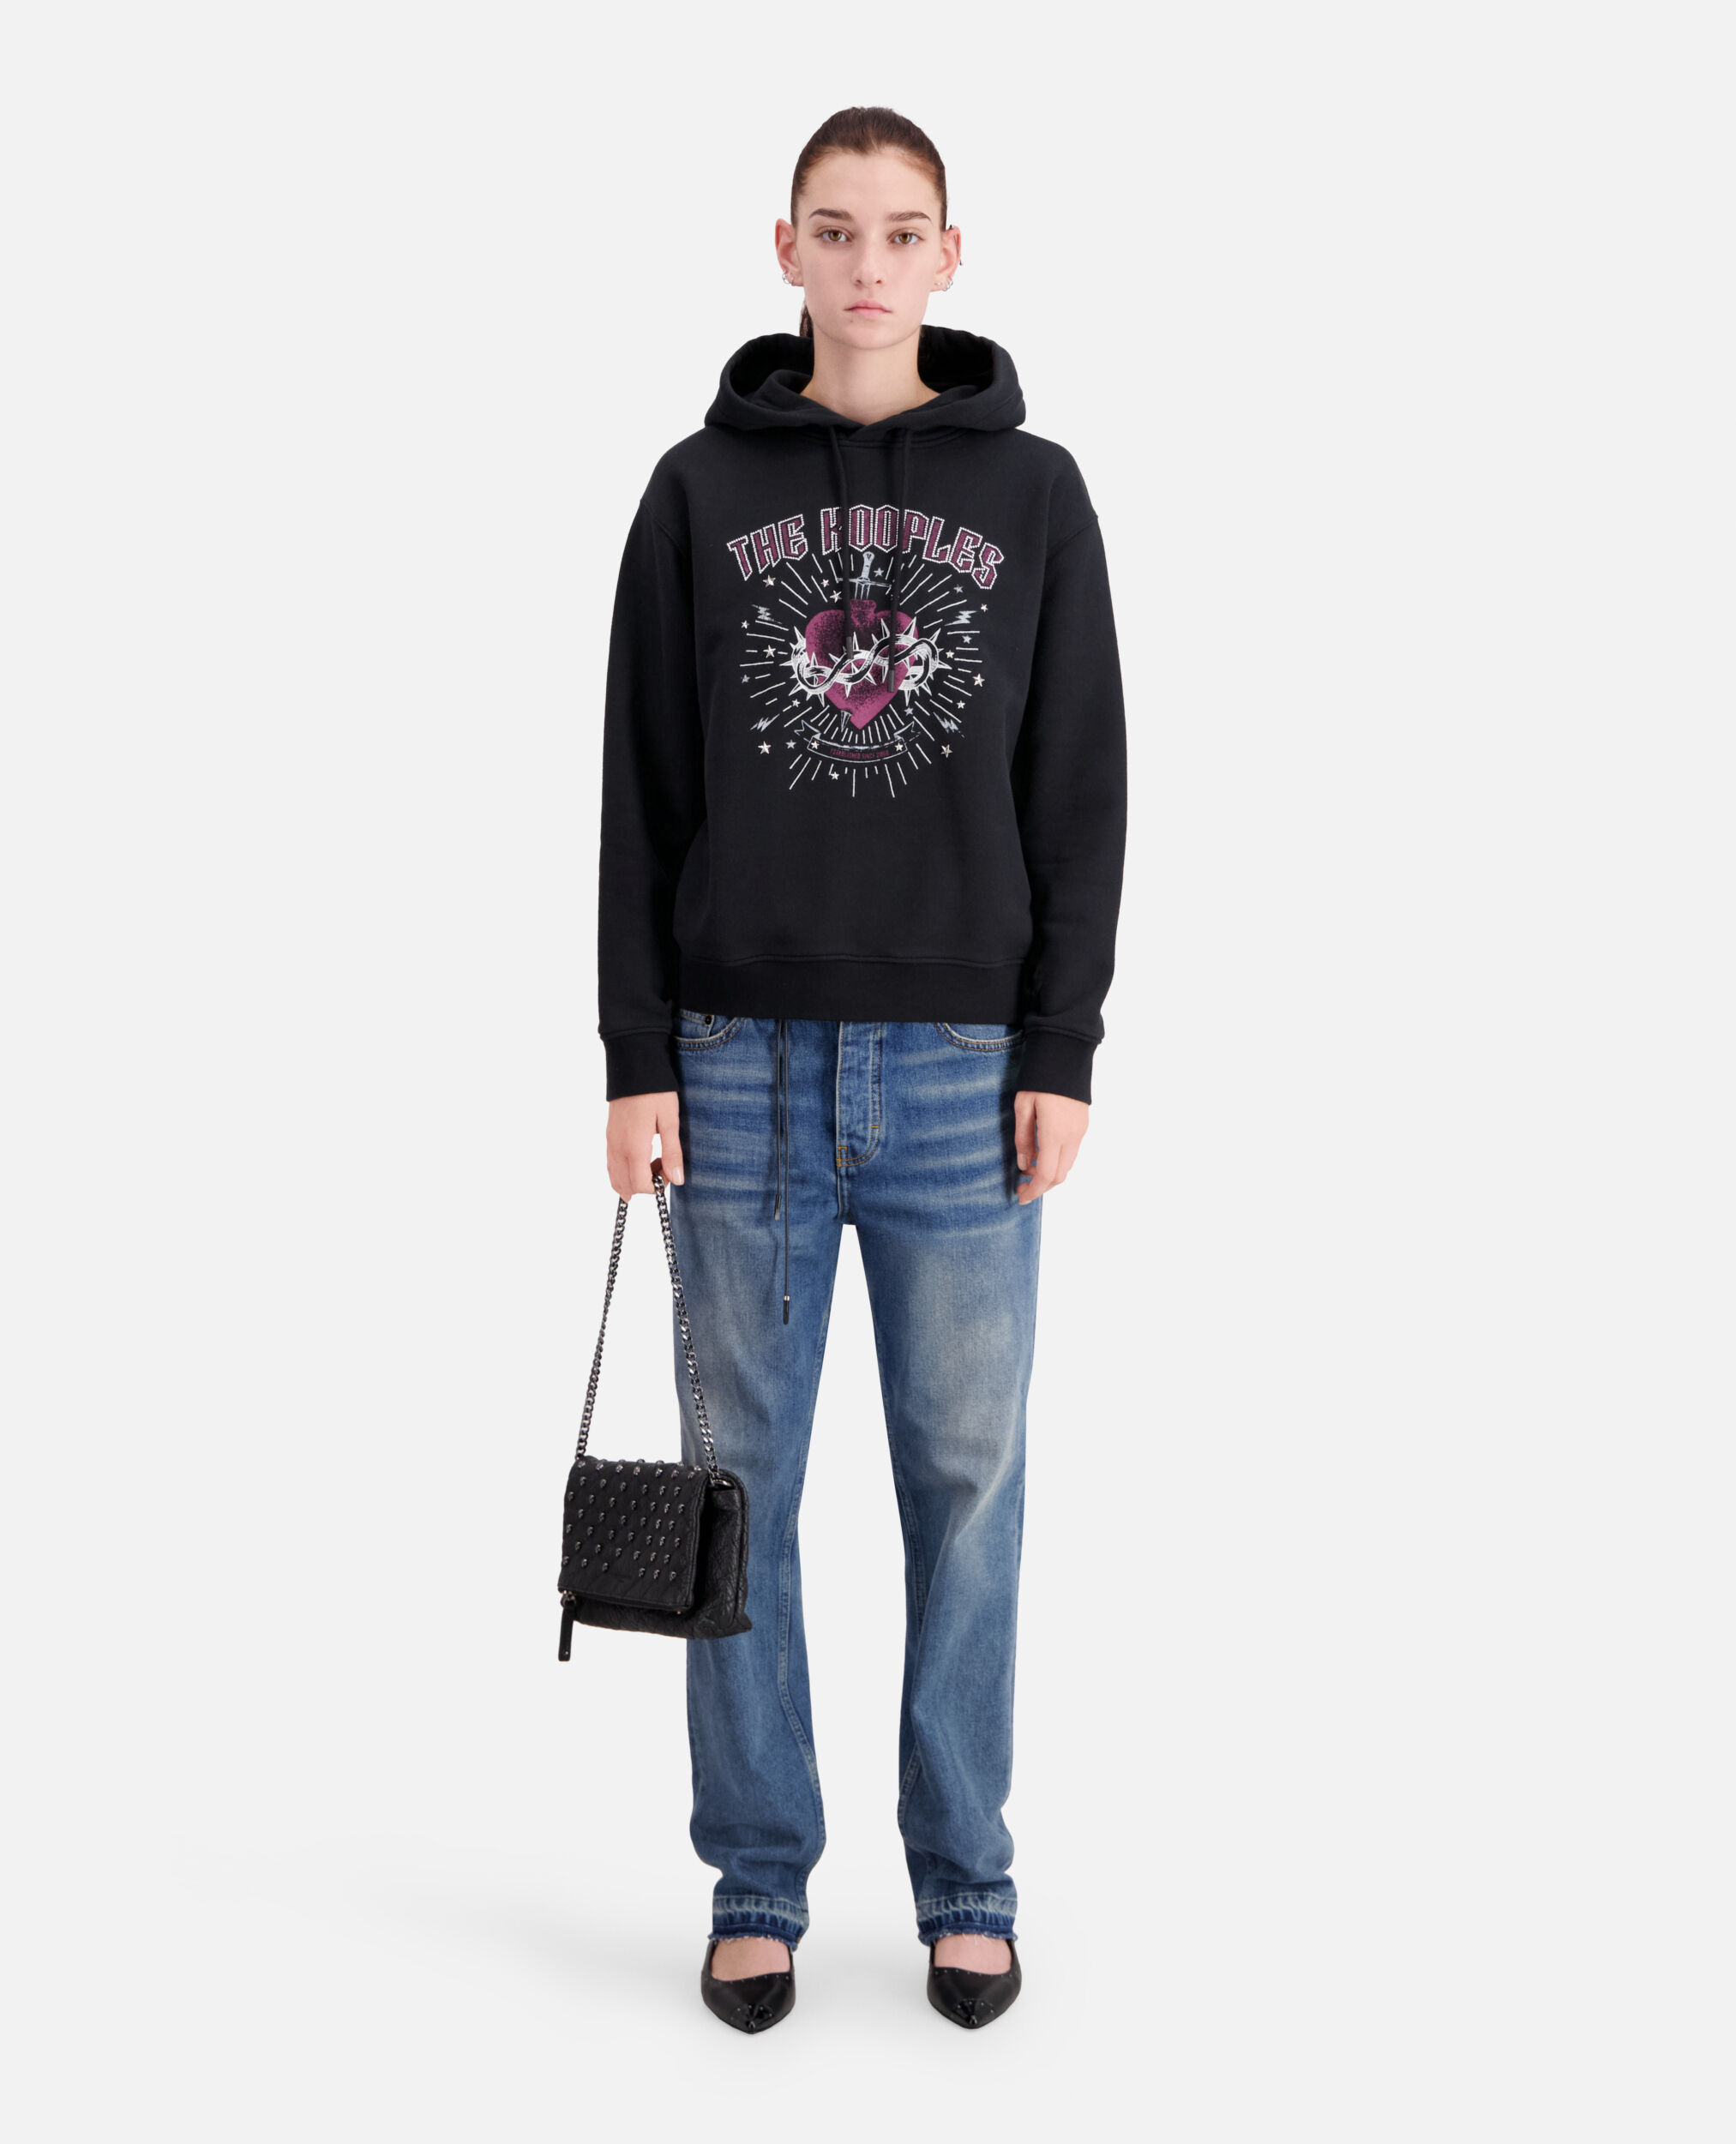 Damen Schwarzes Kapuzensweatshirt mit Siebdruck, BLACK WASHED, hi-res image number null